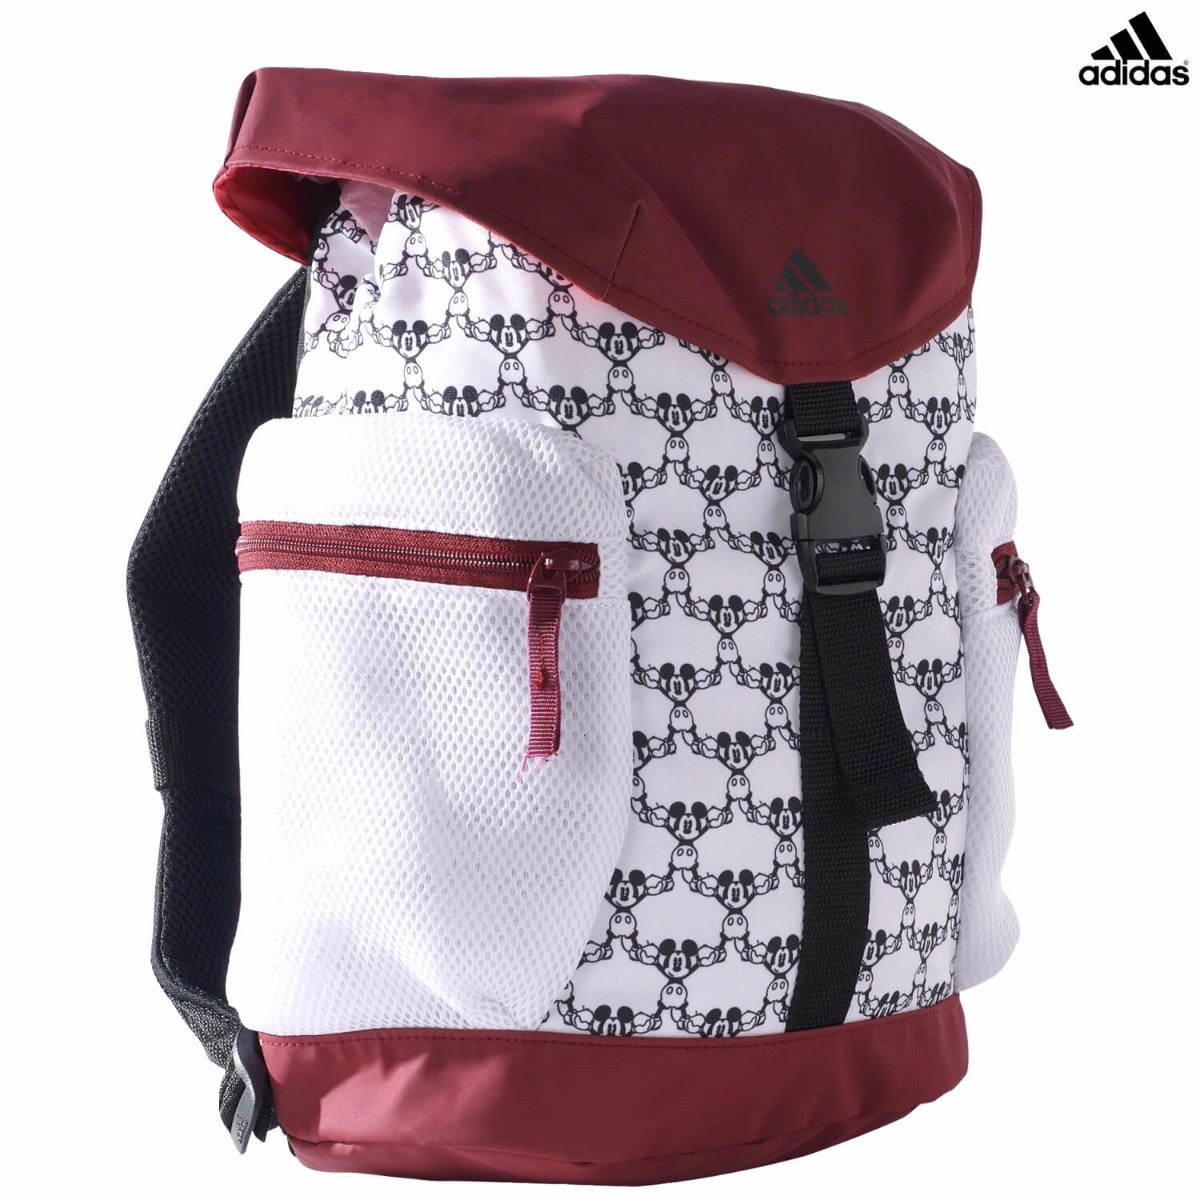 adidas disney backpack